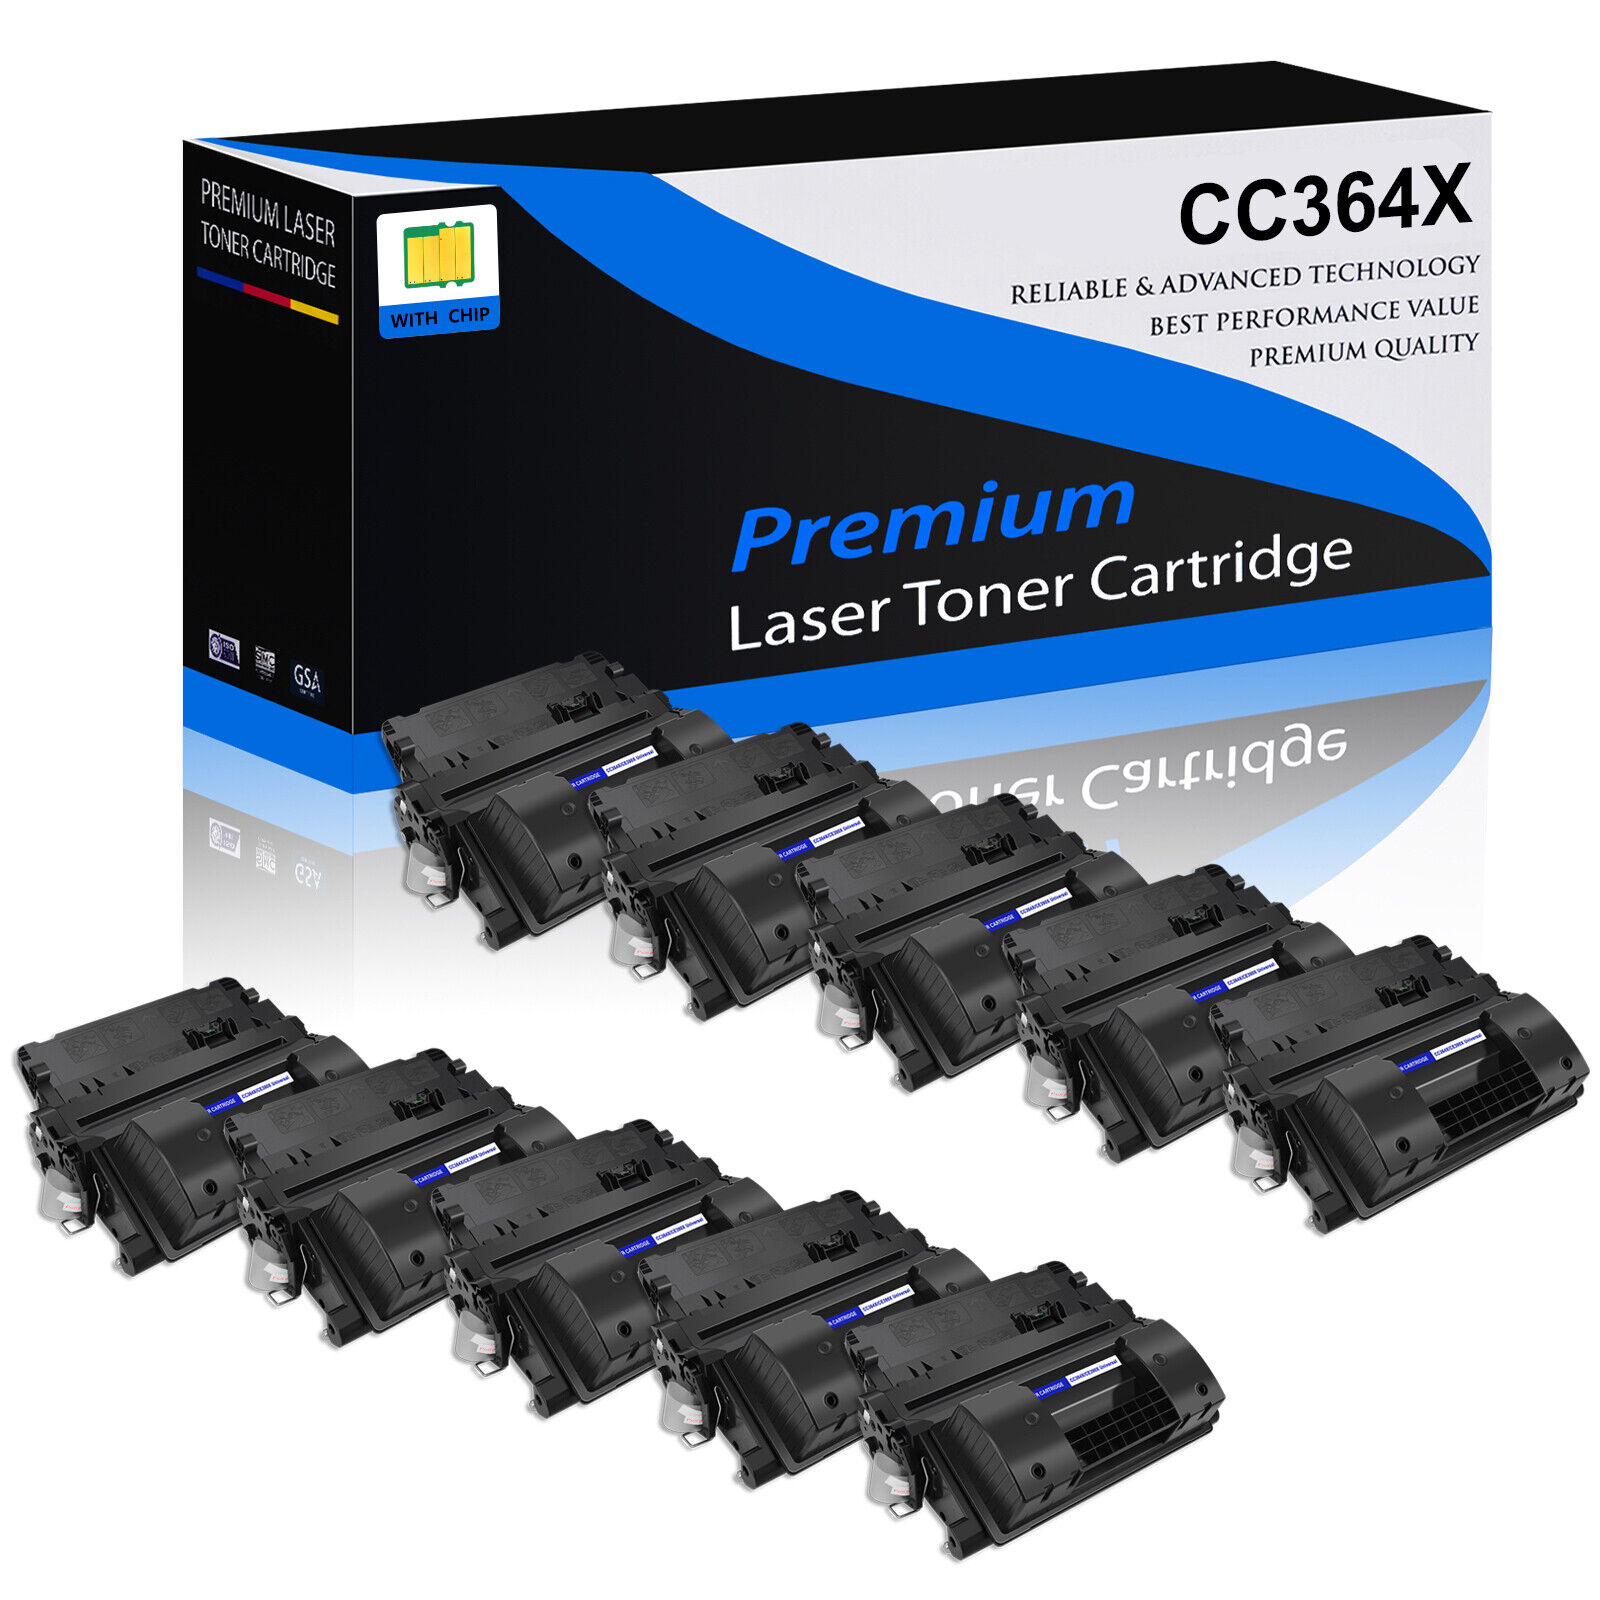 10PK CC364X High Yield Toner Cartridge Fit for HP LaserJet P4015 P4015dn P4515tn